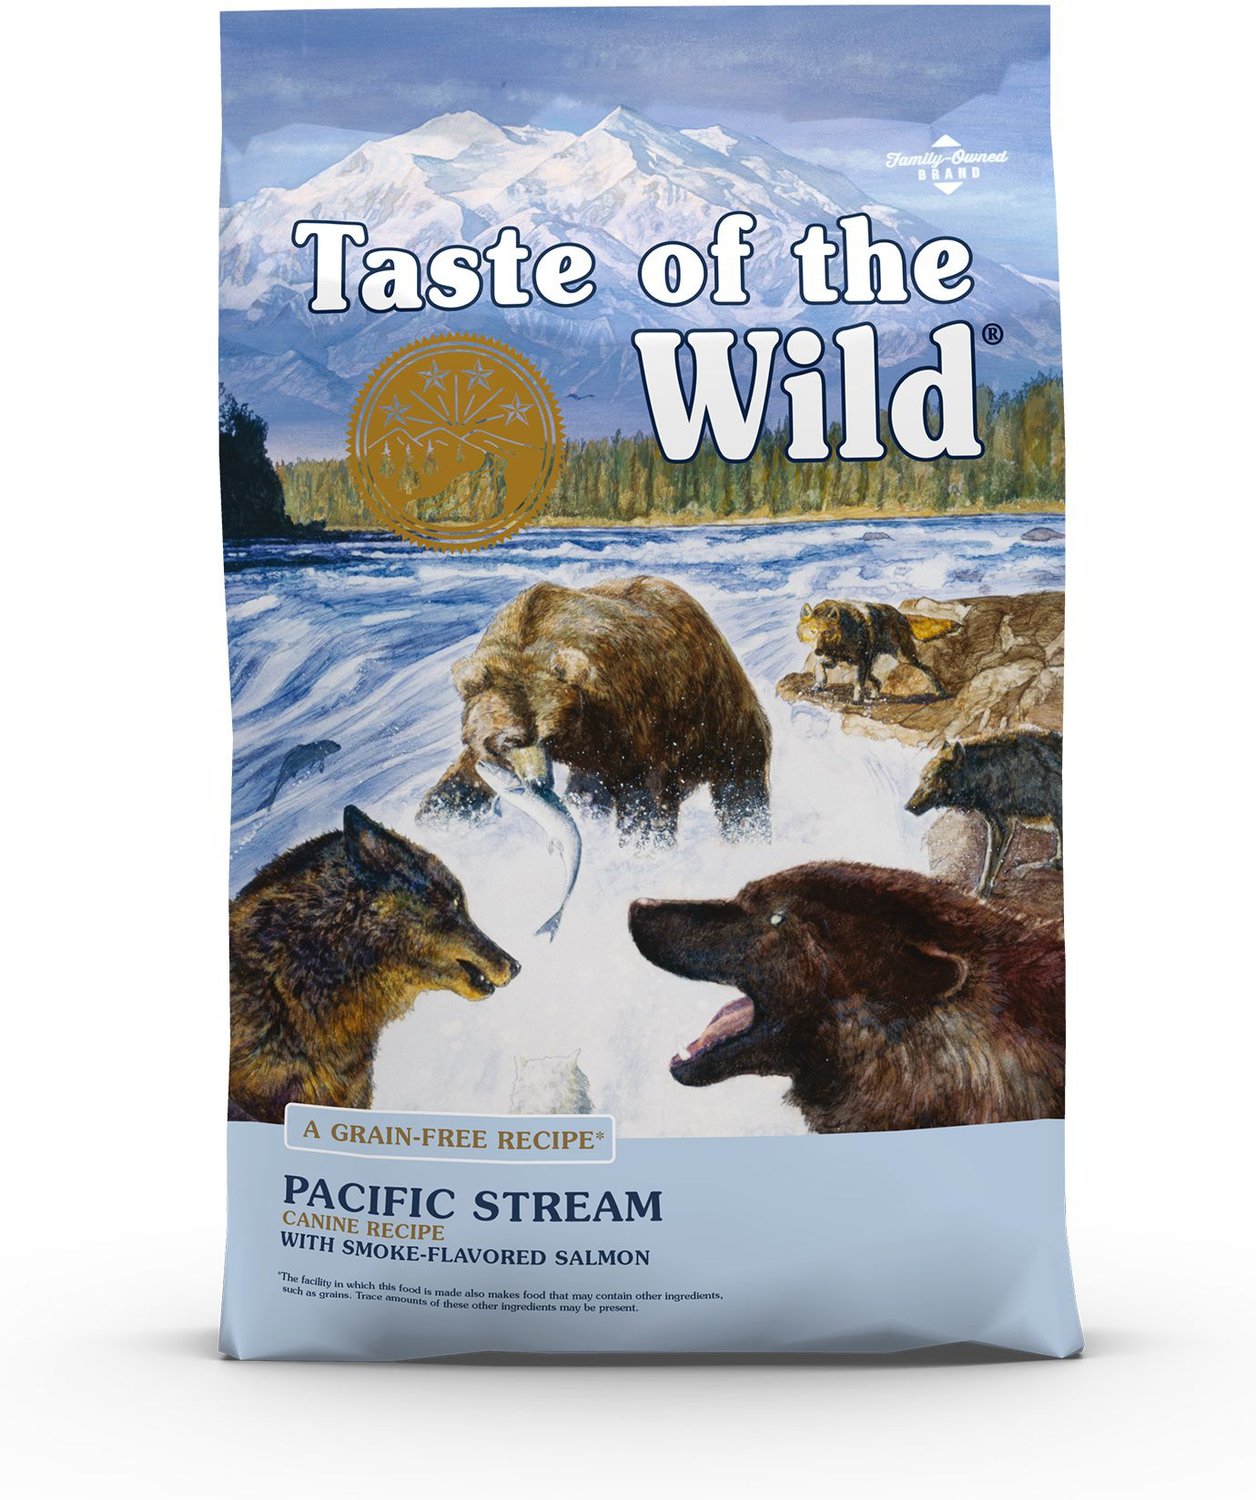 Taste Of The Wild Pacific Stream Grain-free Pet Food